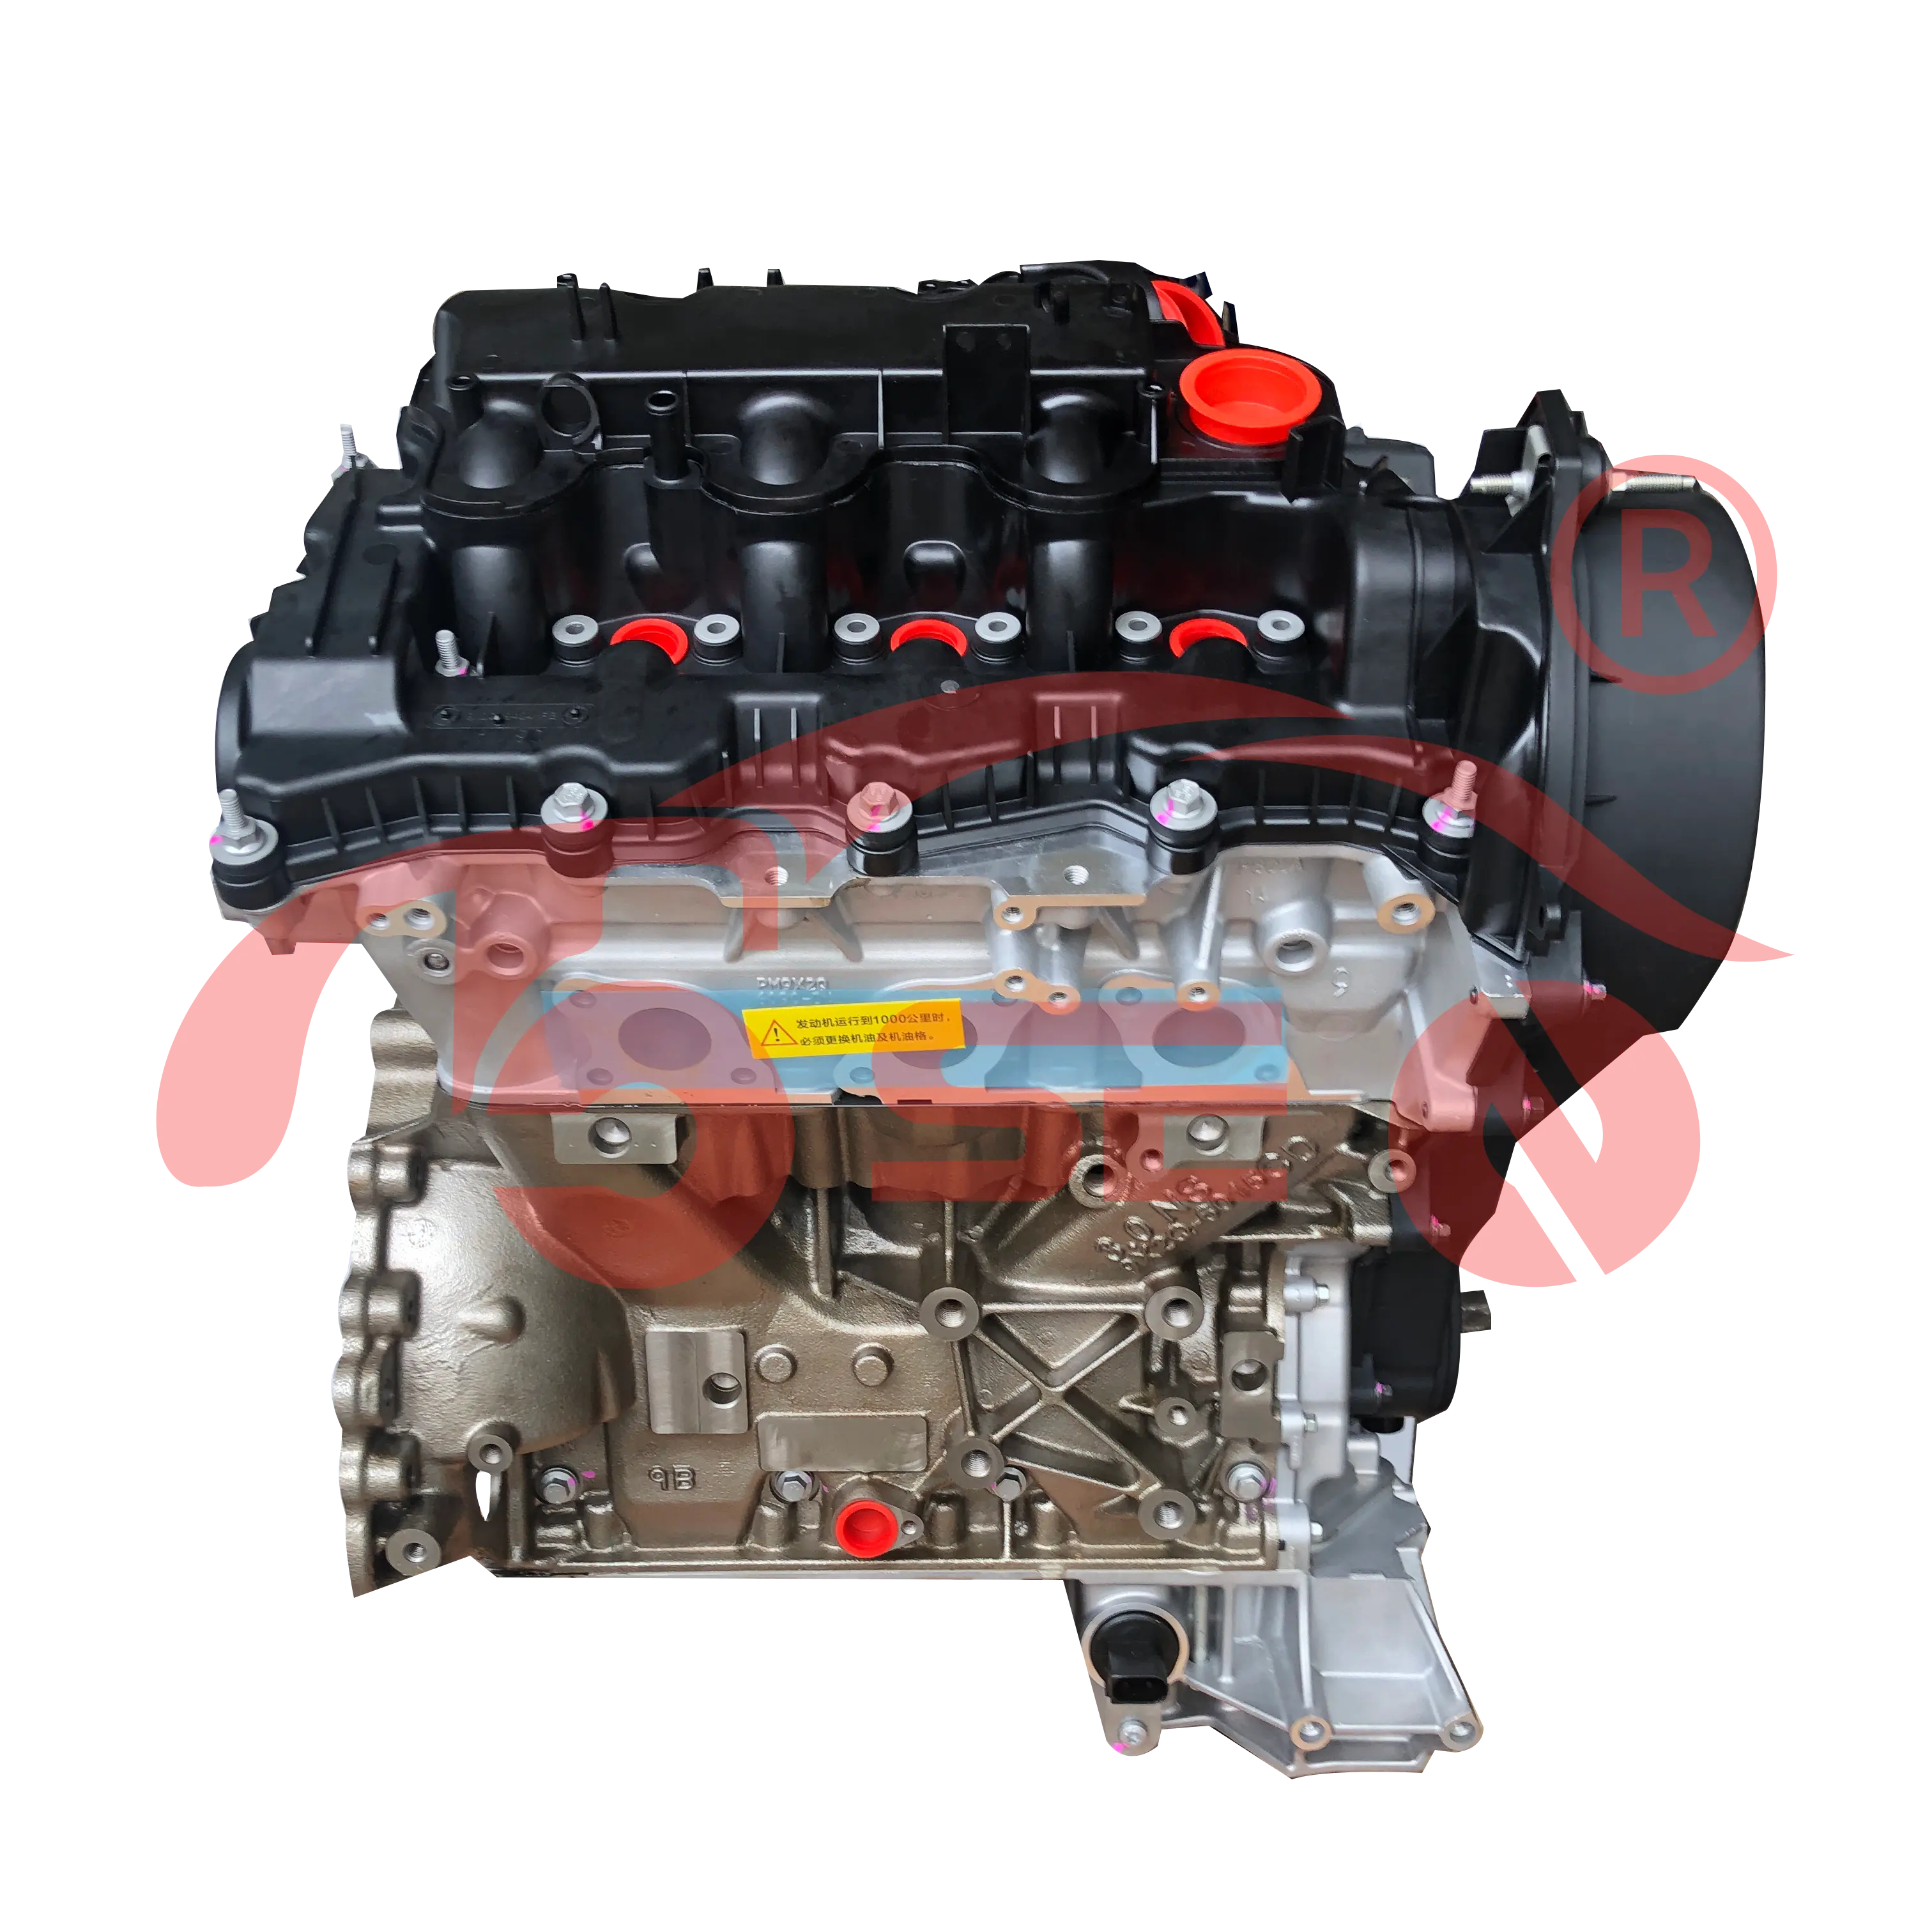 सबसे कम कीमत वाली निर्माता भूमि रोवर डीजल इंजन 3.0 टी डीजल 306dt डीजल